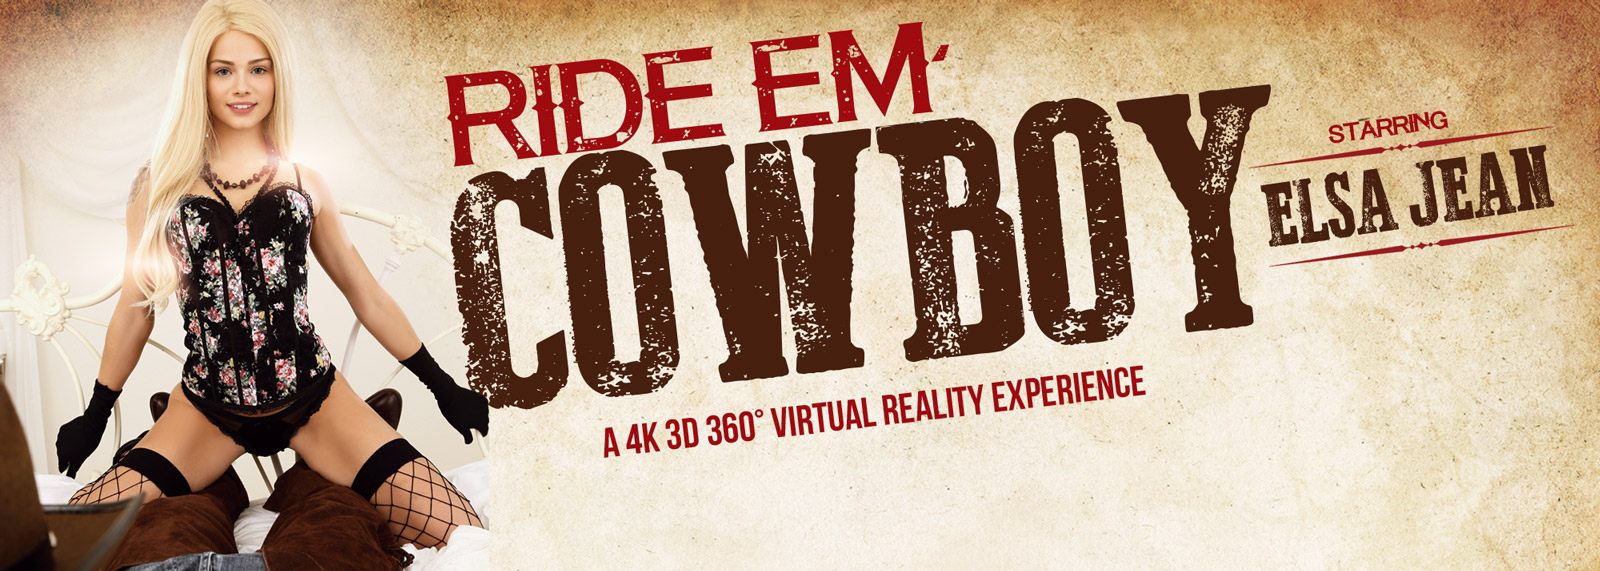 Ride 'Em Cowboy - VR Porn Video, Starring: Elsa Jean